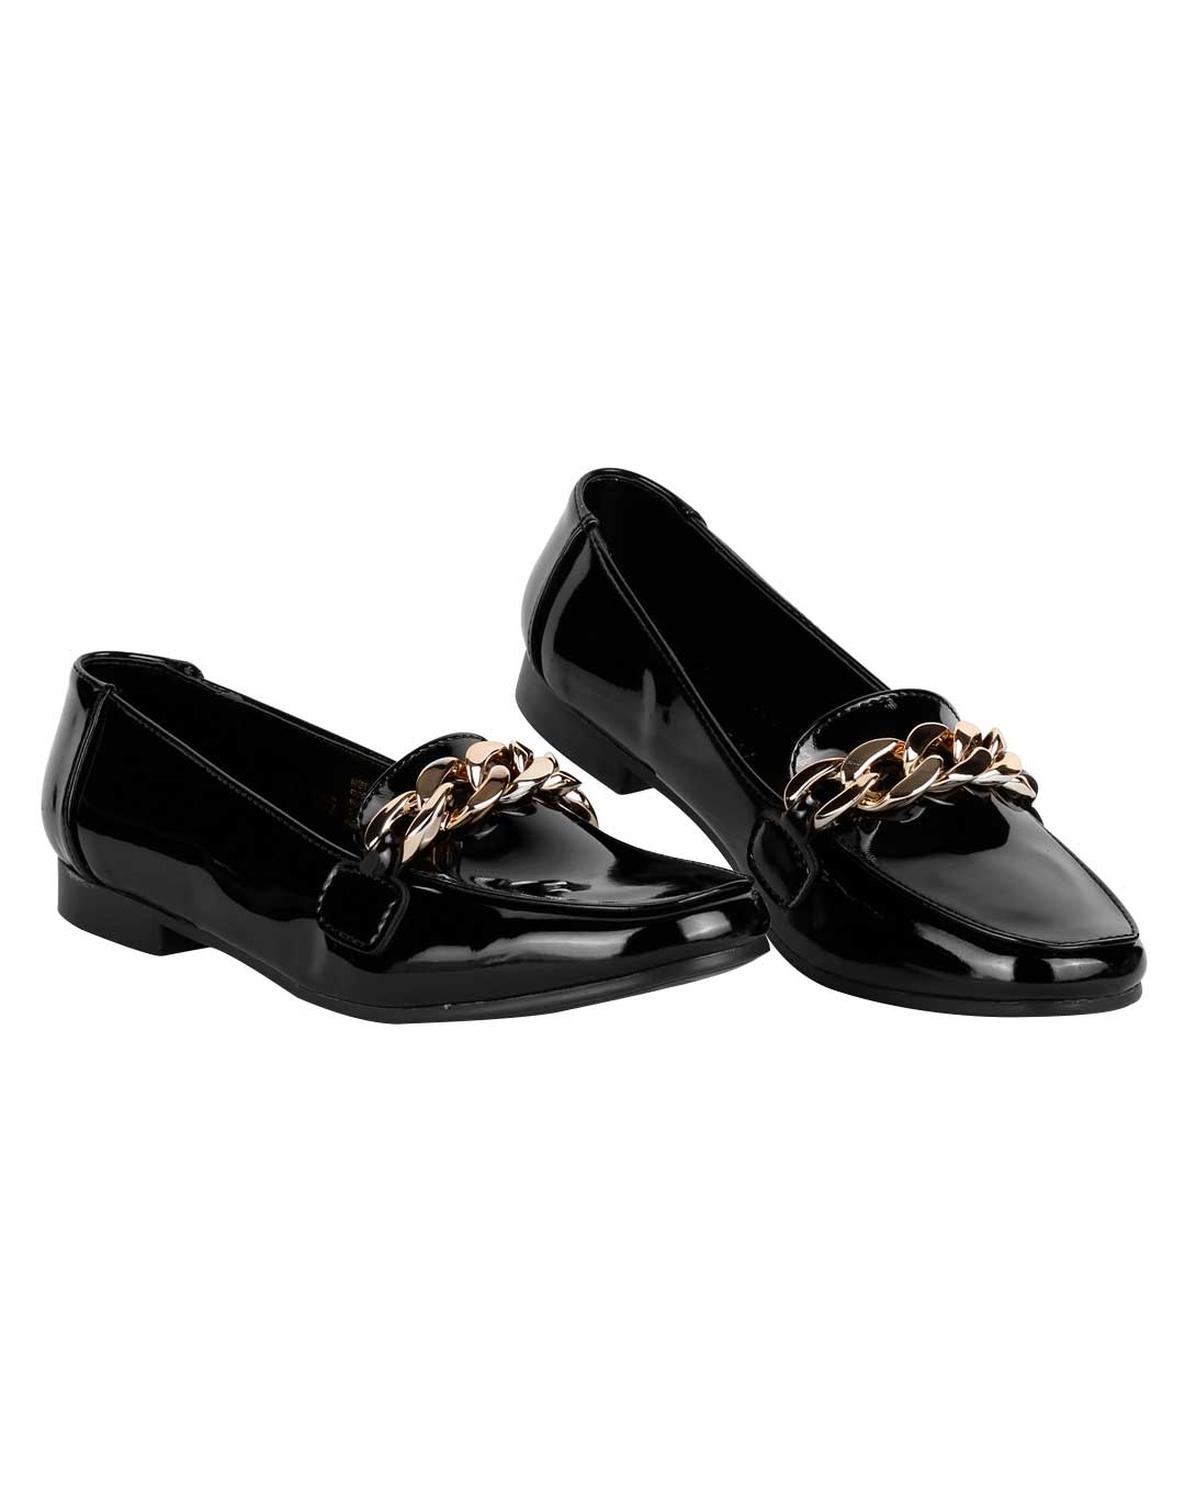 Zapato Casual Piso Mujer Negro TipoCharol Stfashion 06203905